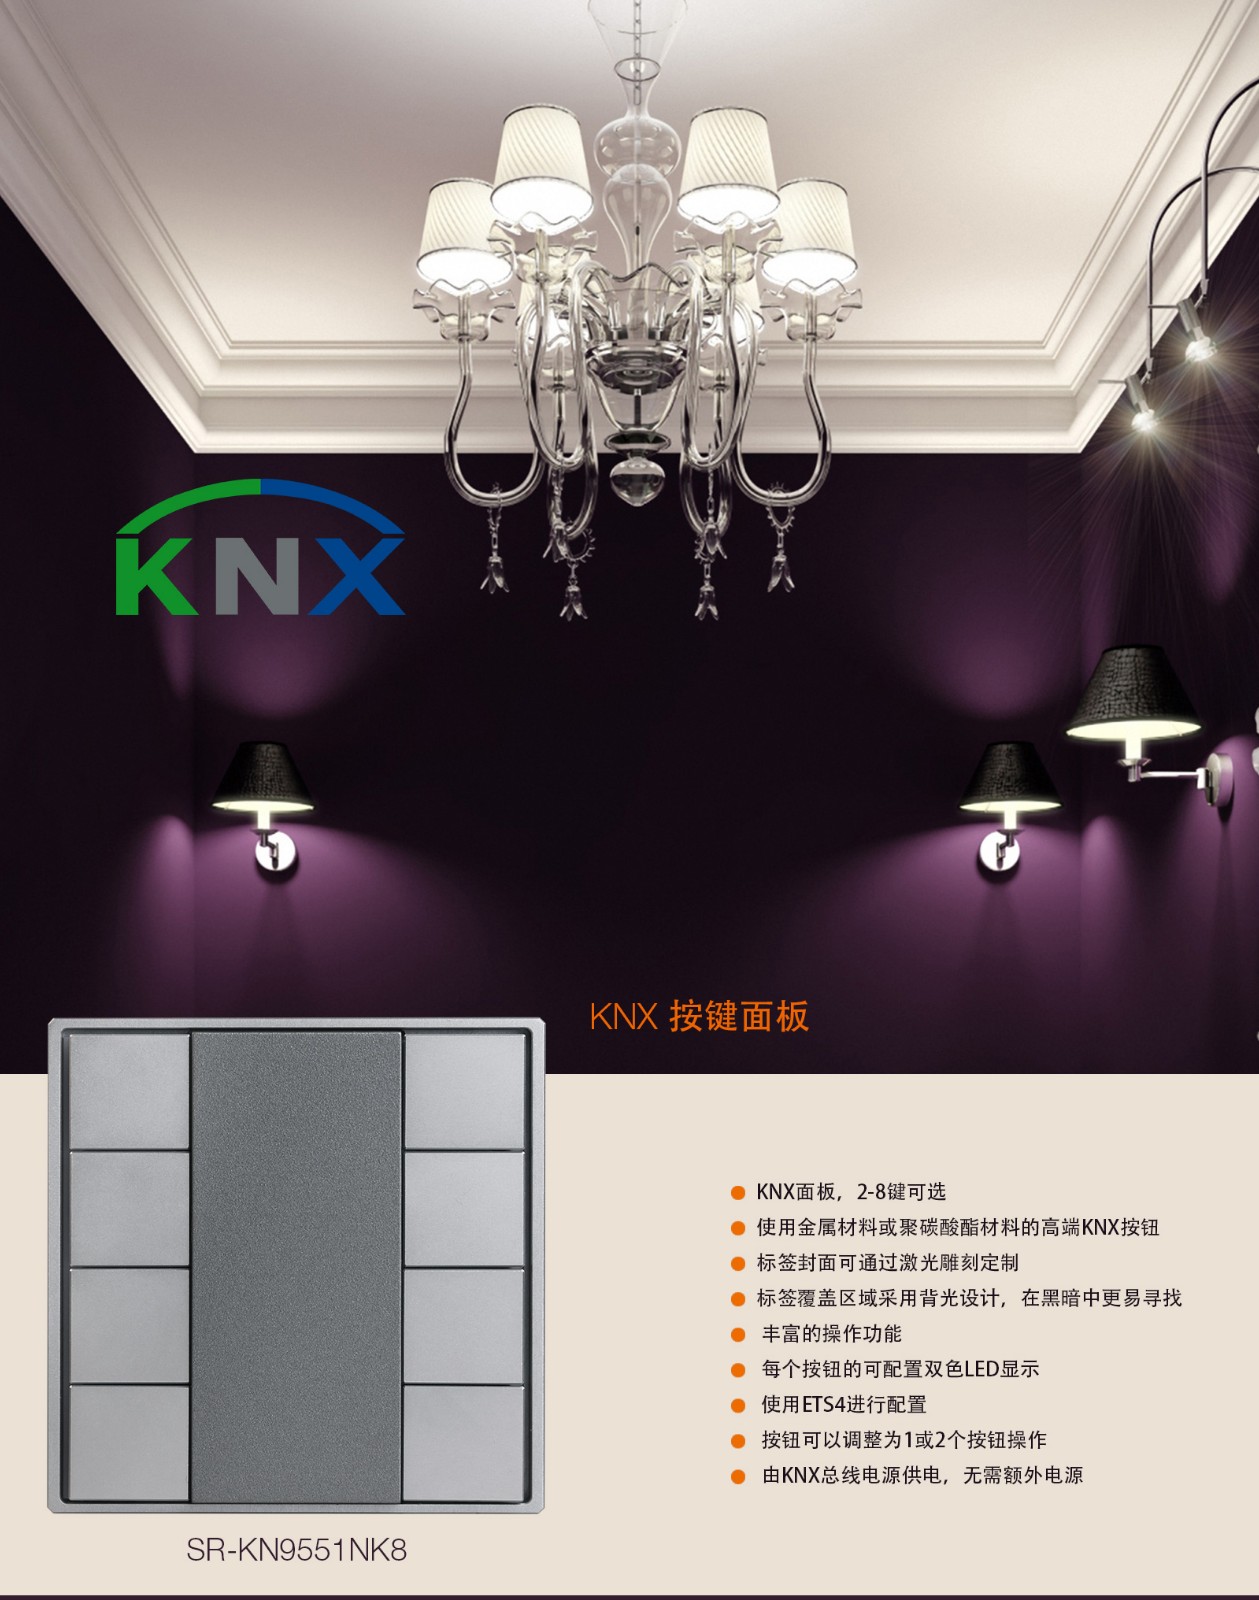 KNX中文推广图-SR-KN9551NK8.jpg